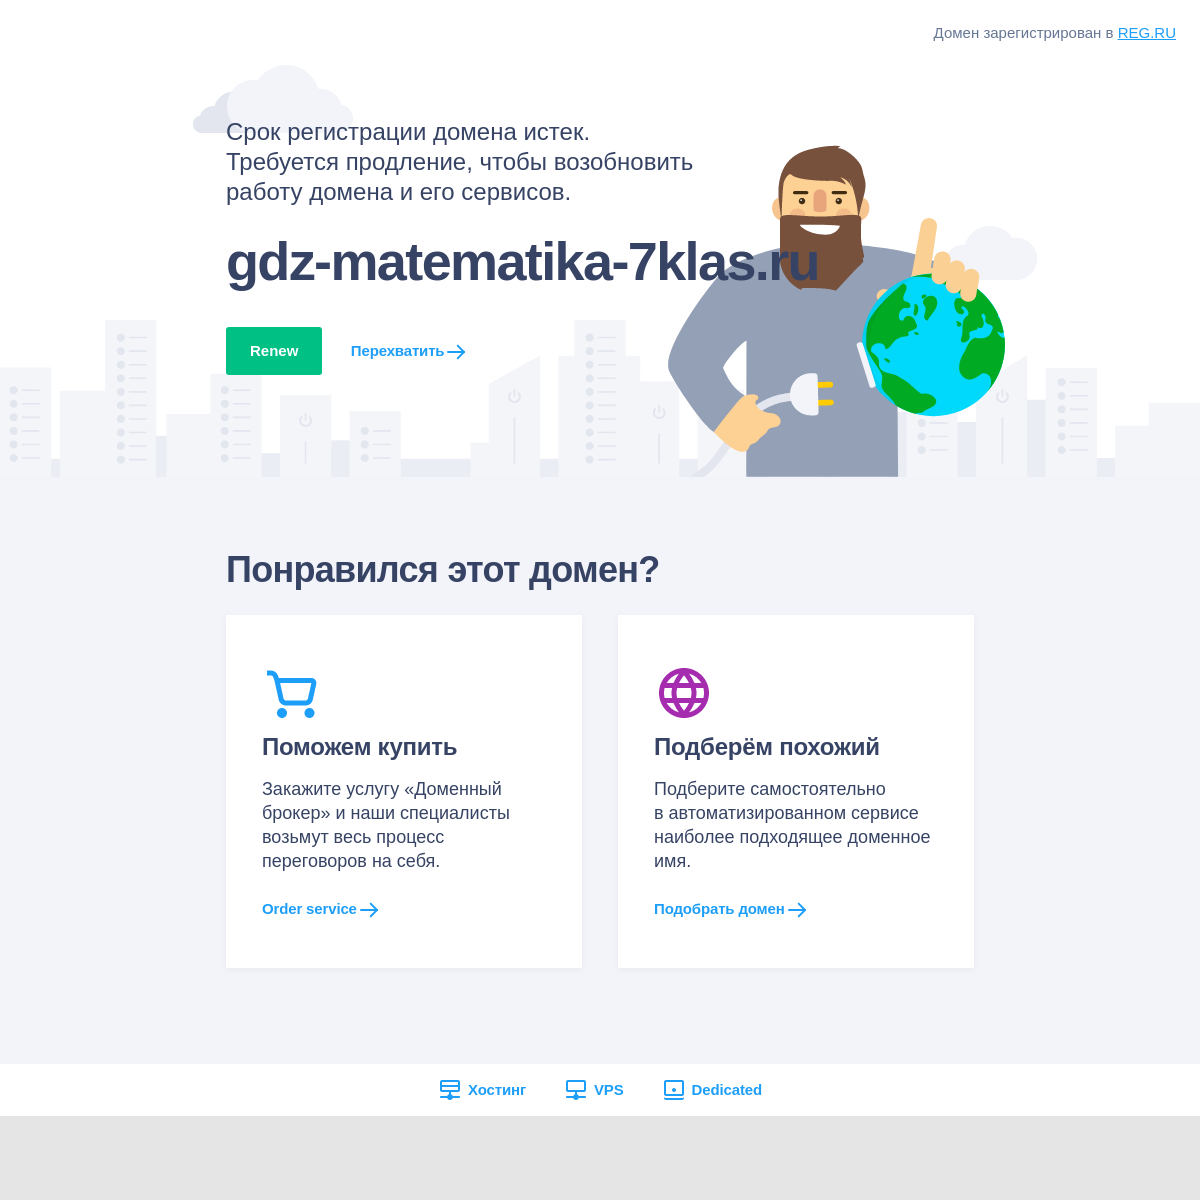 A complete backup of gdz-matematika-7klas.ru